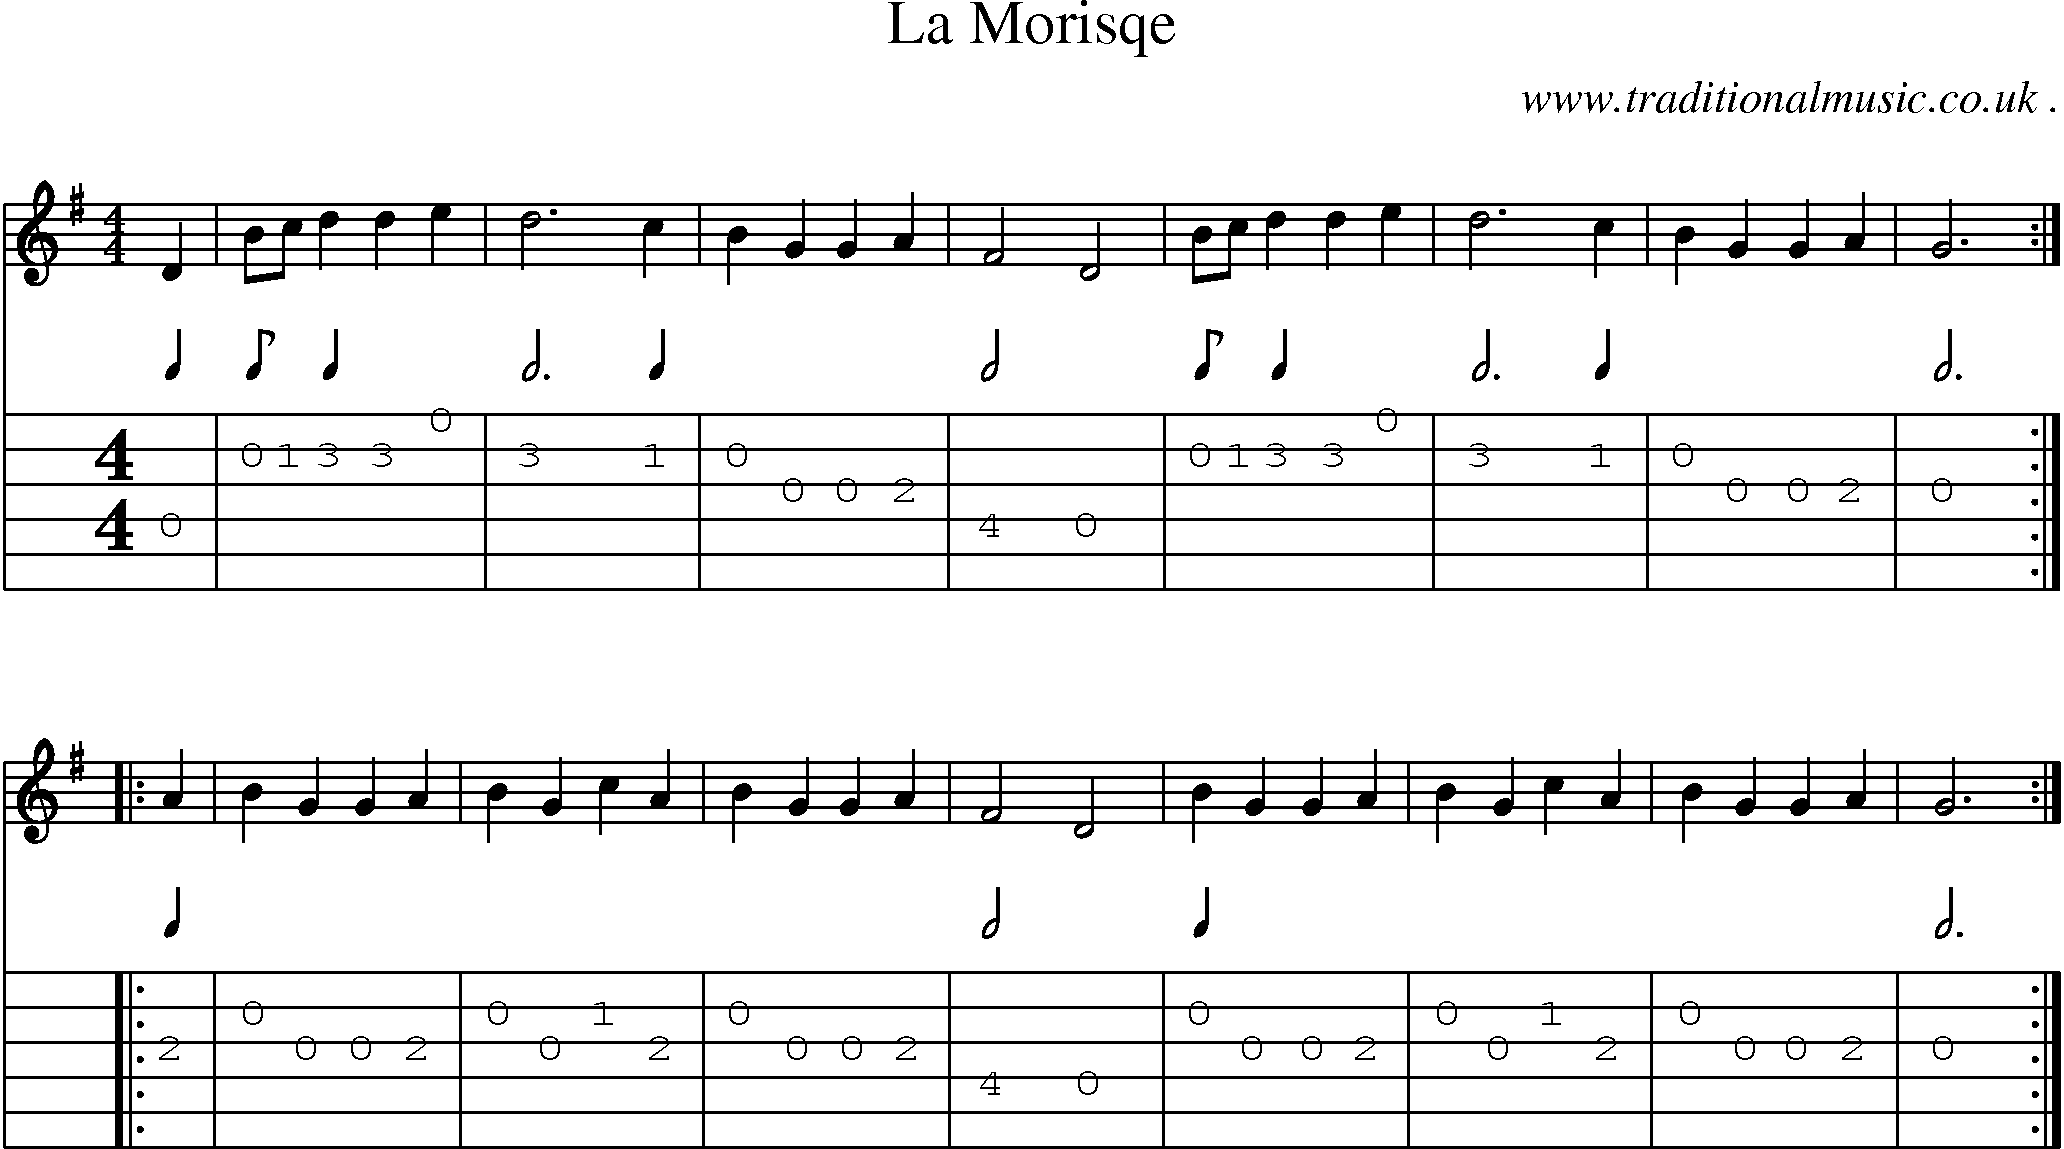 Sheet-Music and Guitar Tabs for La Morisqe